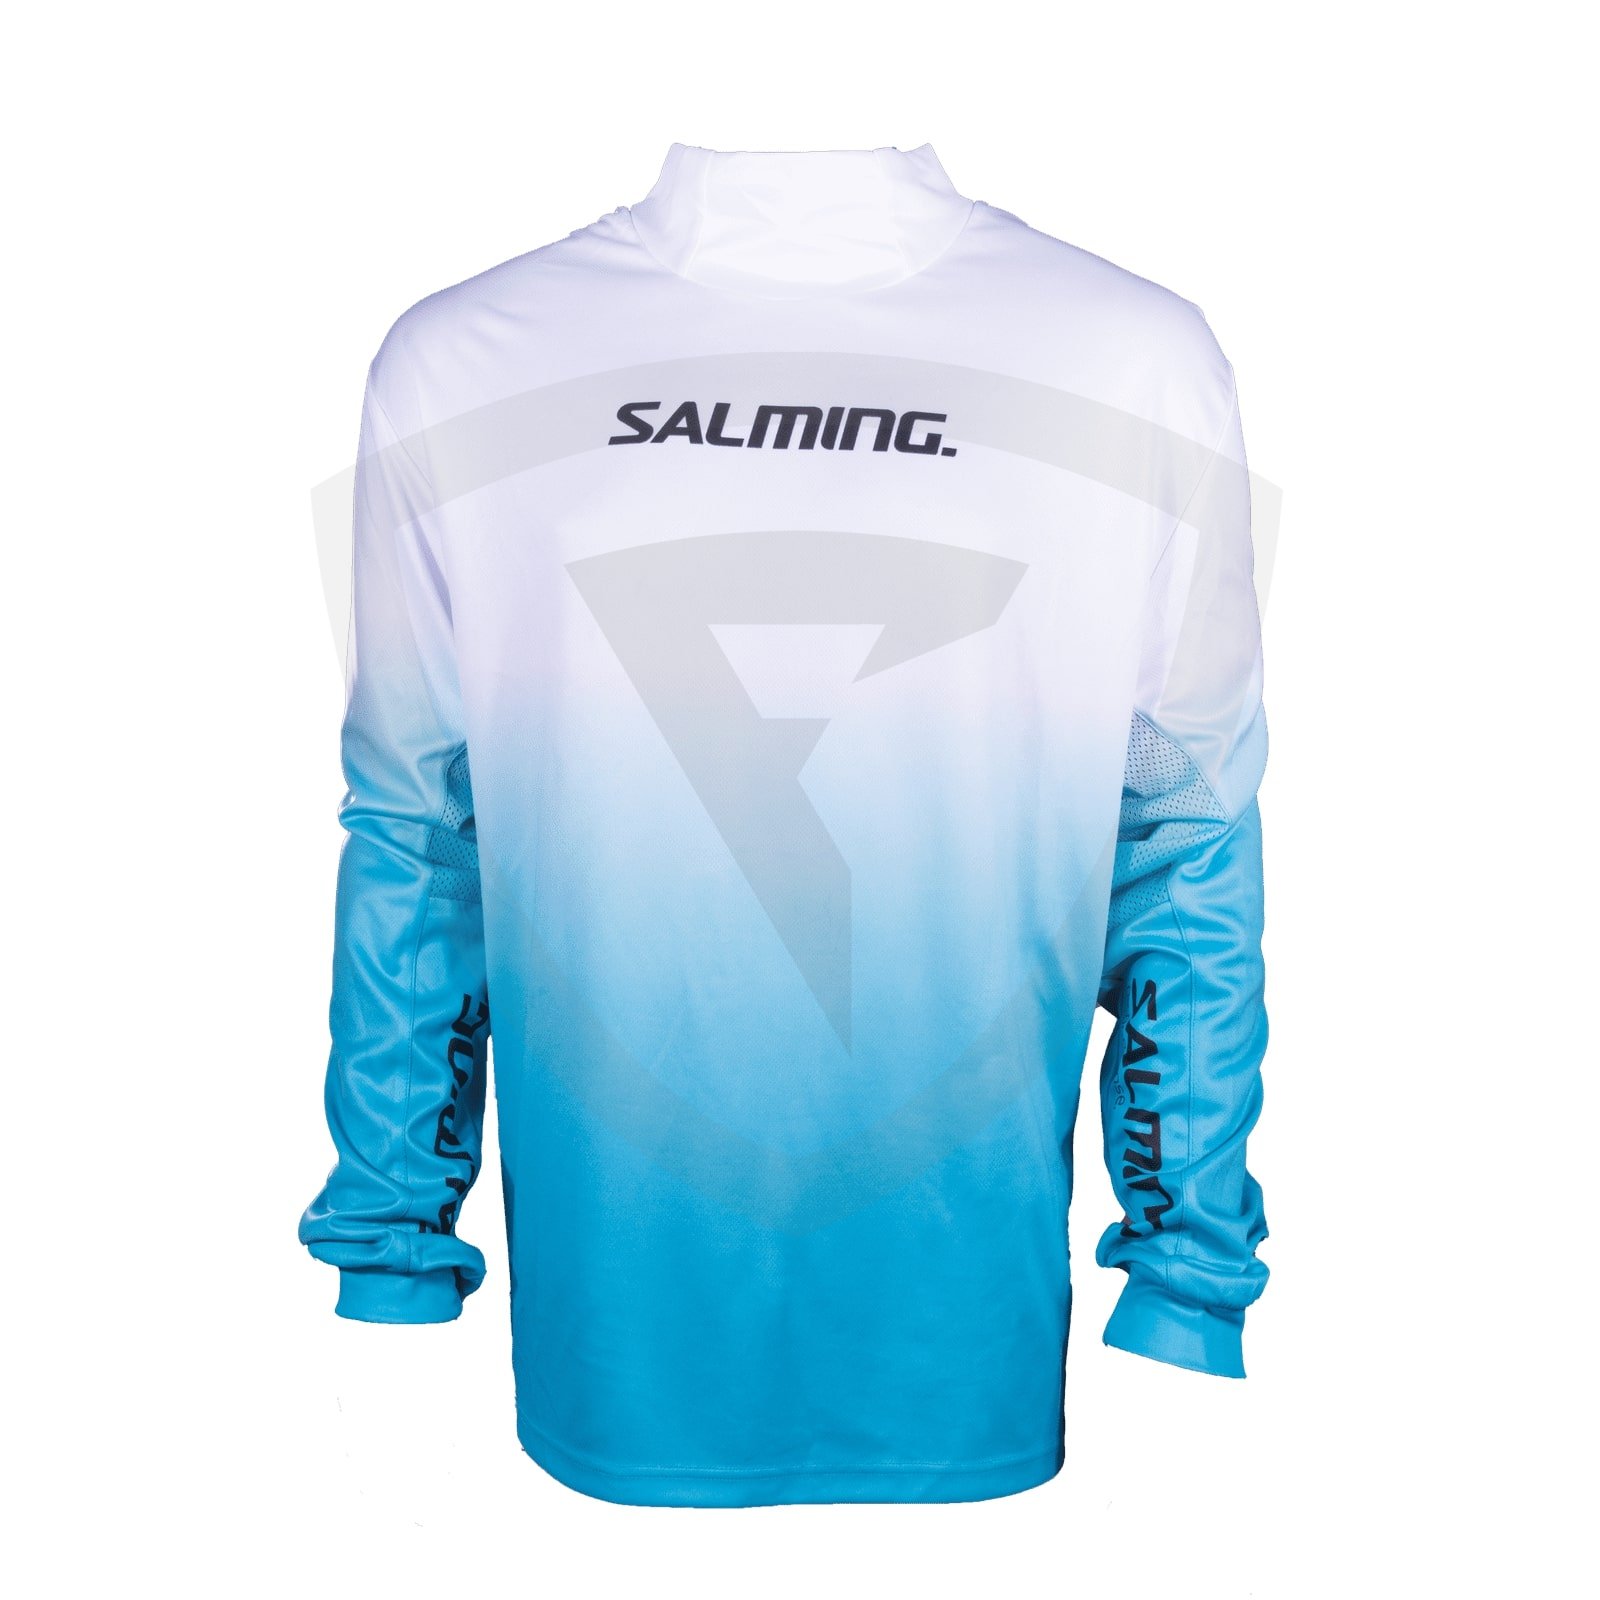 Salming Goalie Jersey SR Blue-White M modrá-bílá